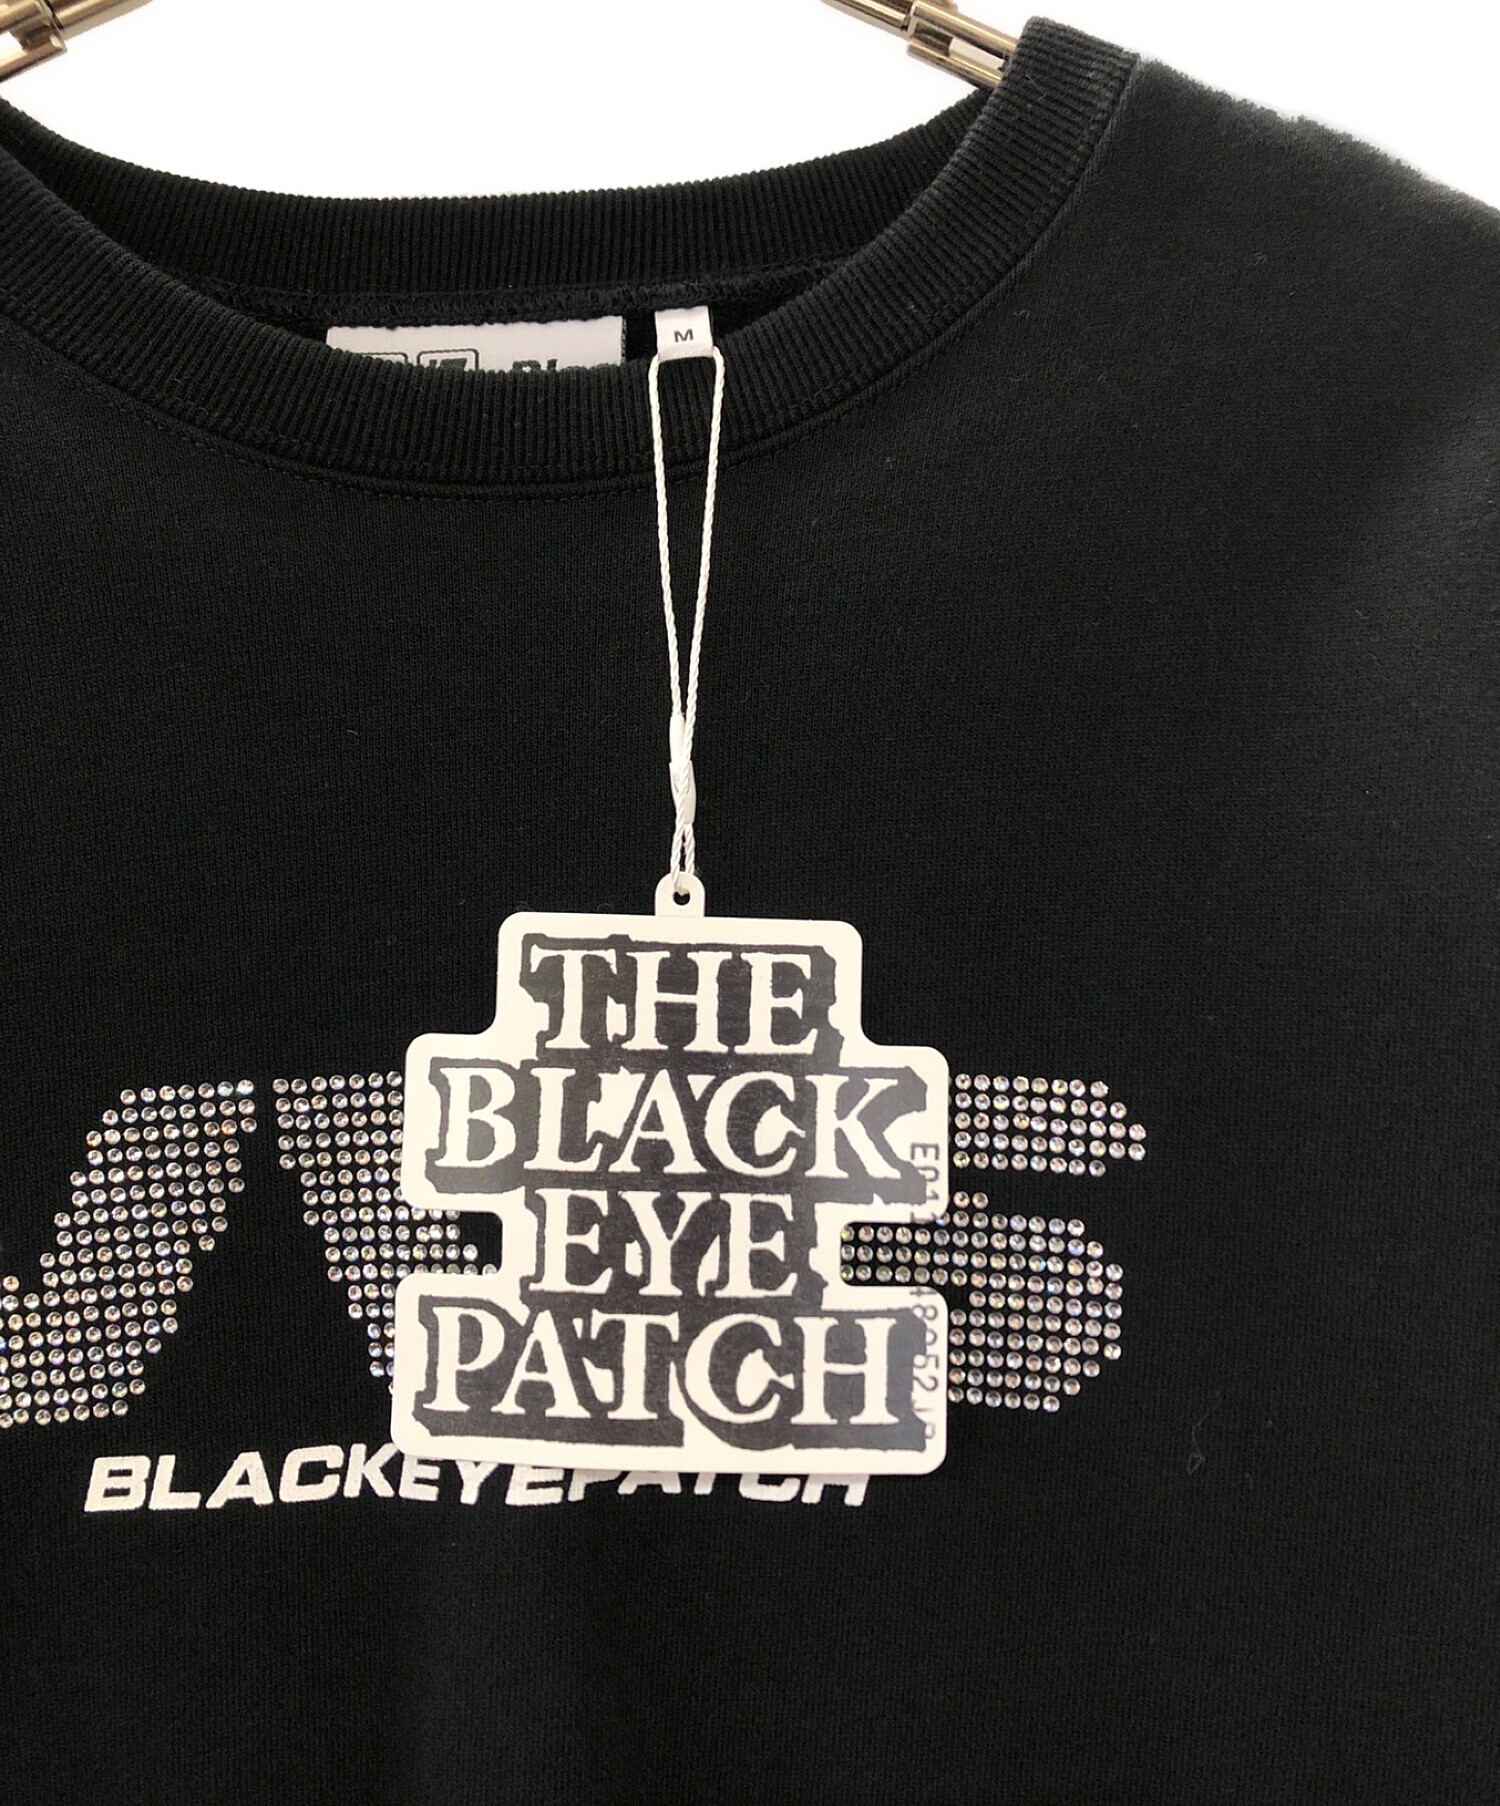 BlackEyePatch (ブラックアイパッチ) ライン ストーン スウェット ブラック サイズ:M